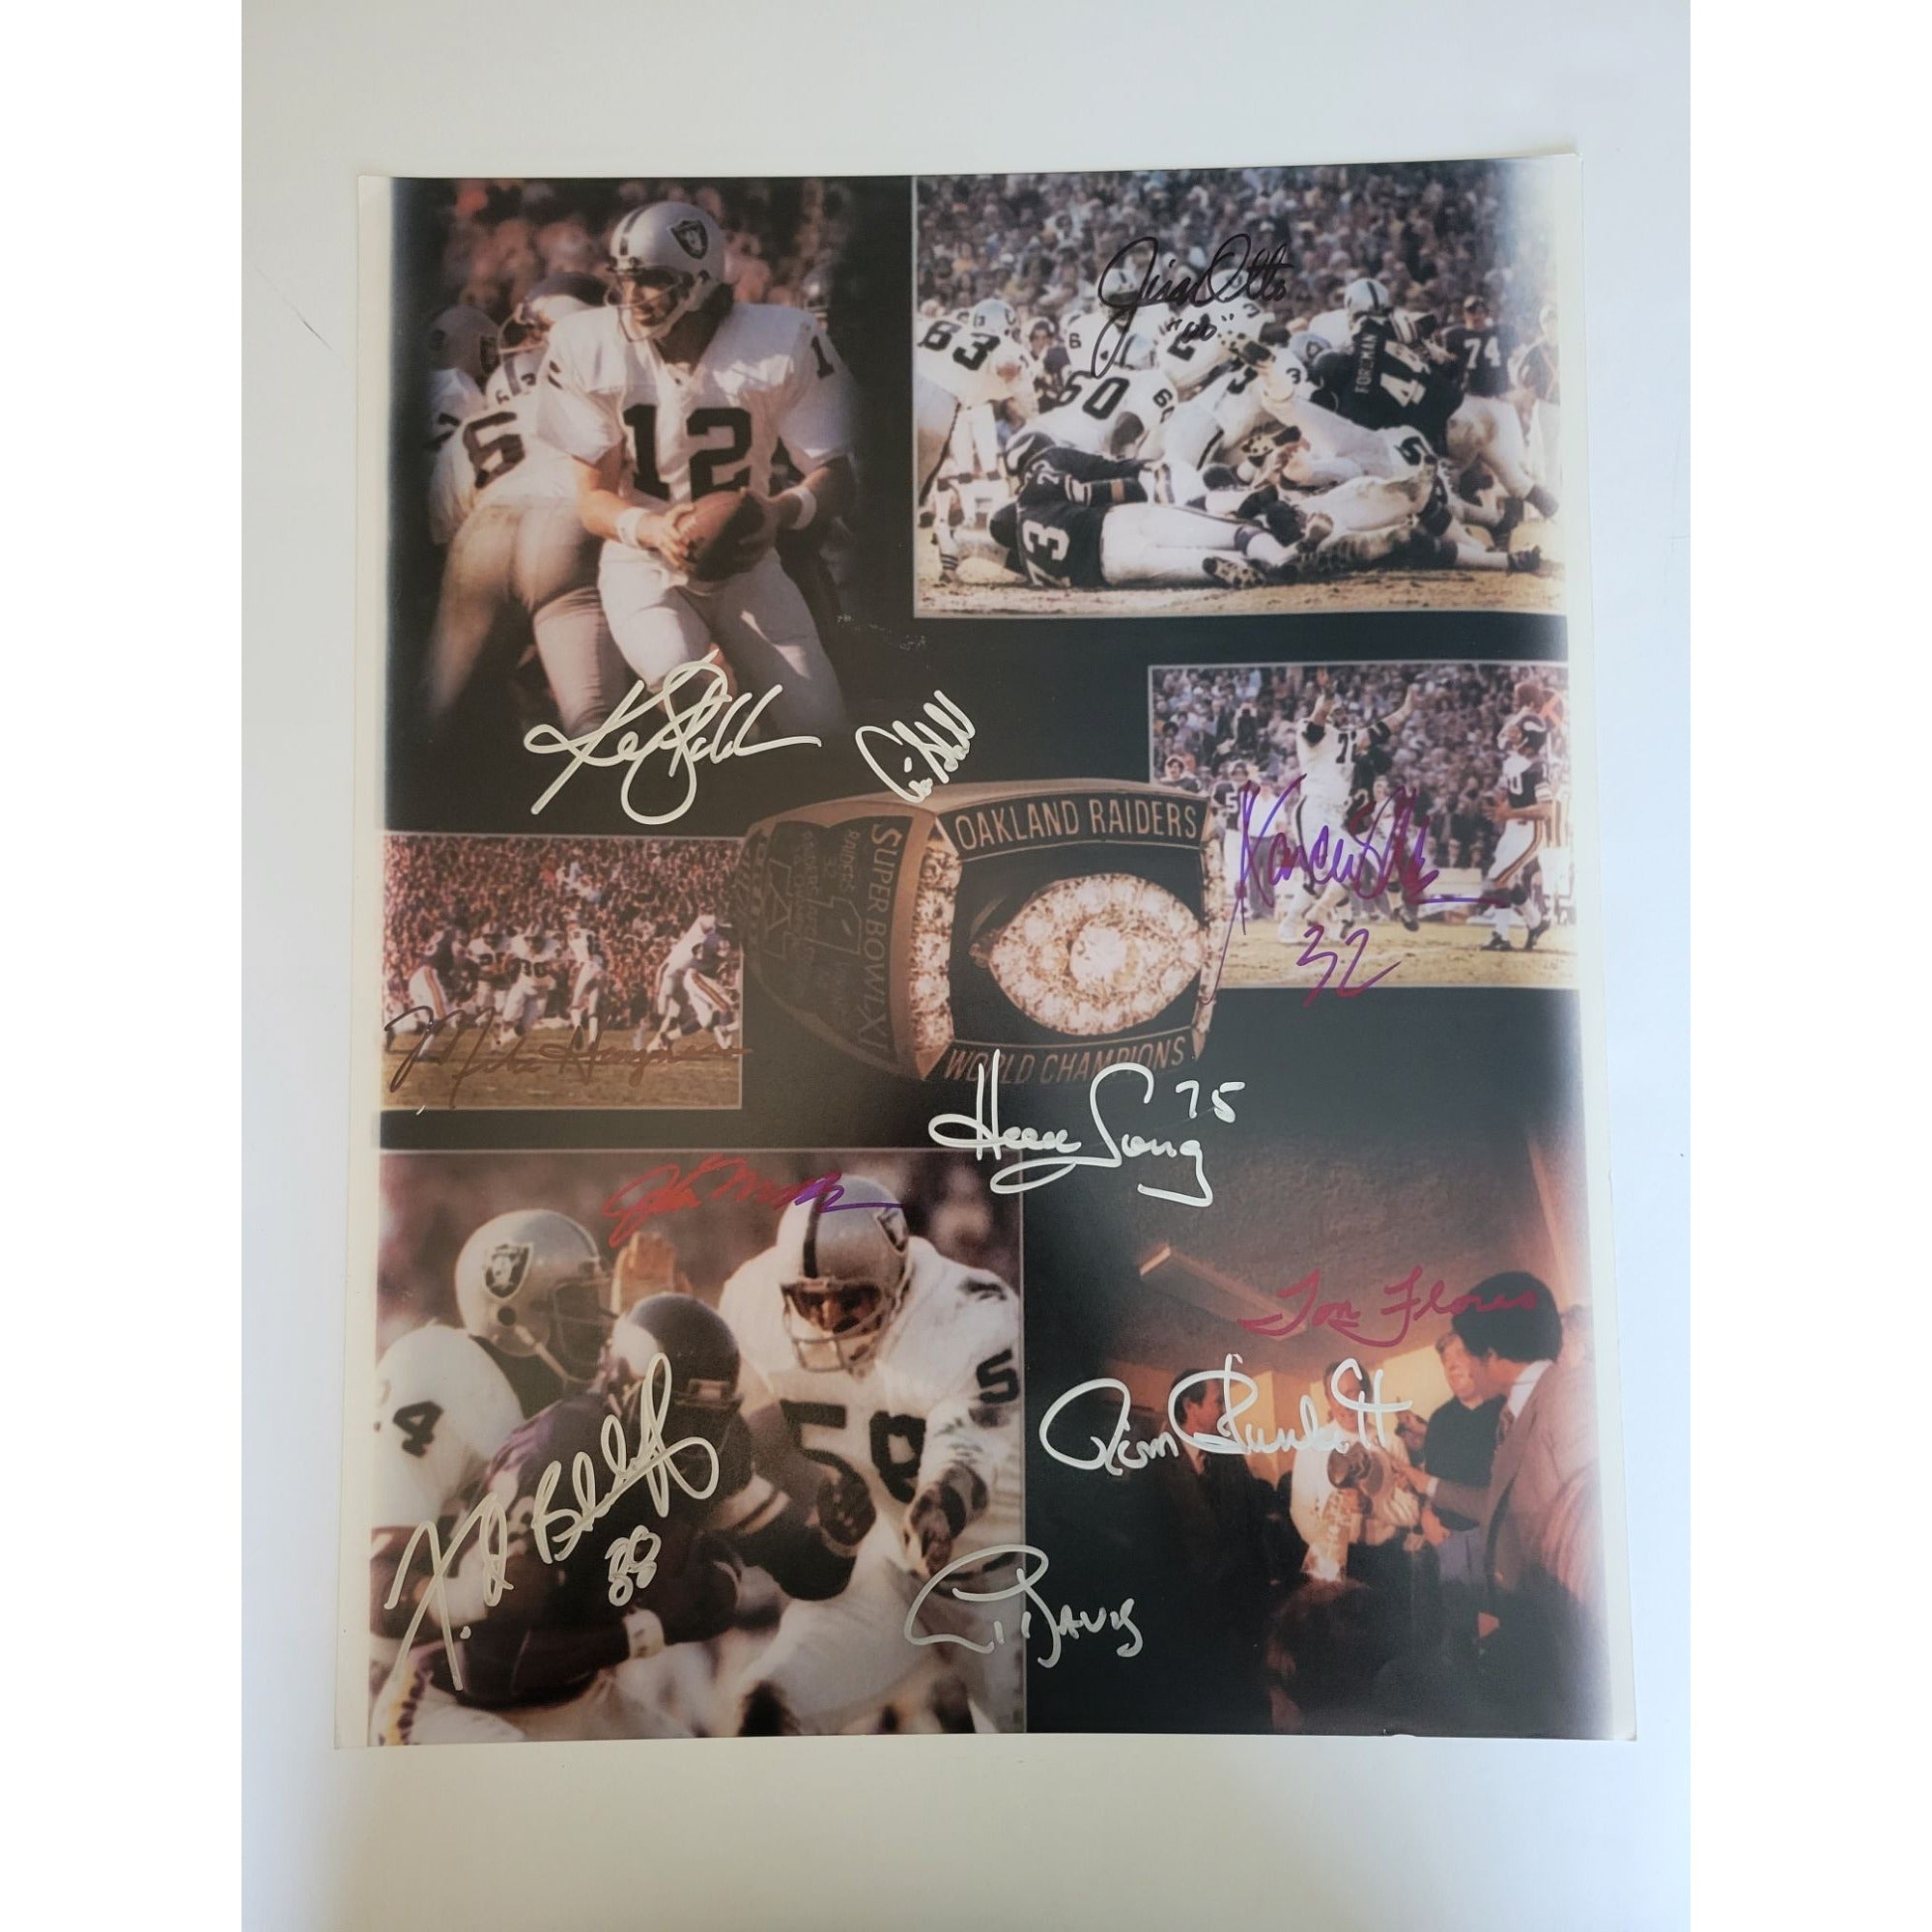 Oakland Raiders Ken Stabler Art Shell G Amato Marcus Allen Al Davis 16 x 20 photo signed with proof